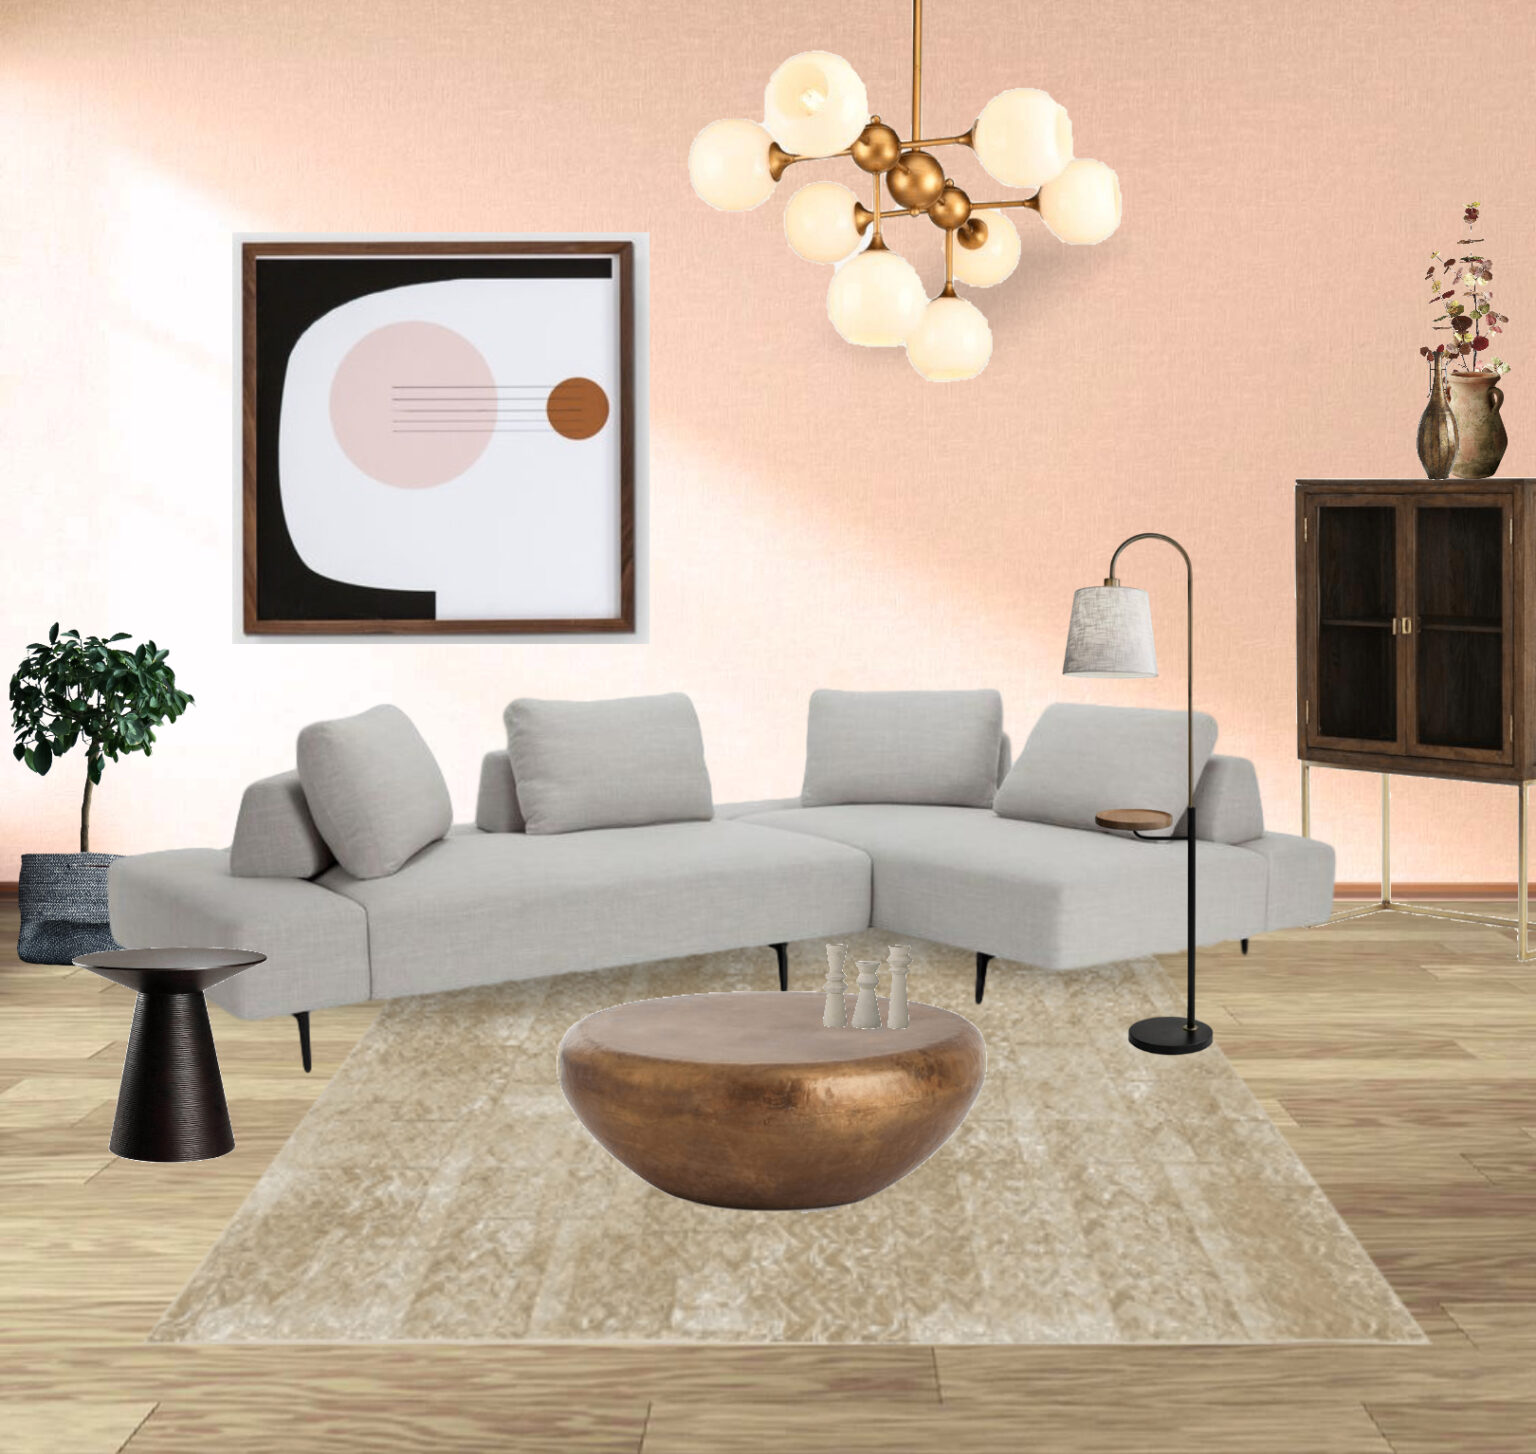 INTERIOR-DESIGN-ONLINE-COURSE-2020 - Interior Design Retail Design Home